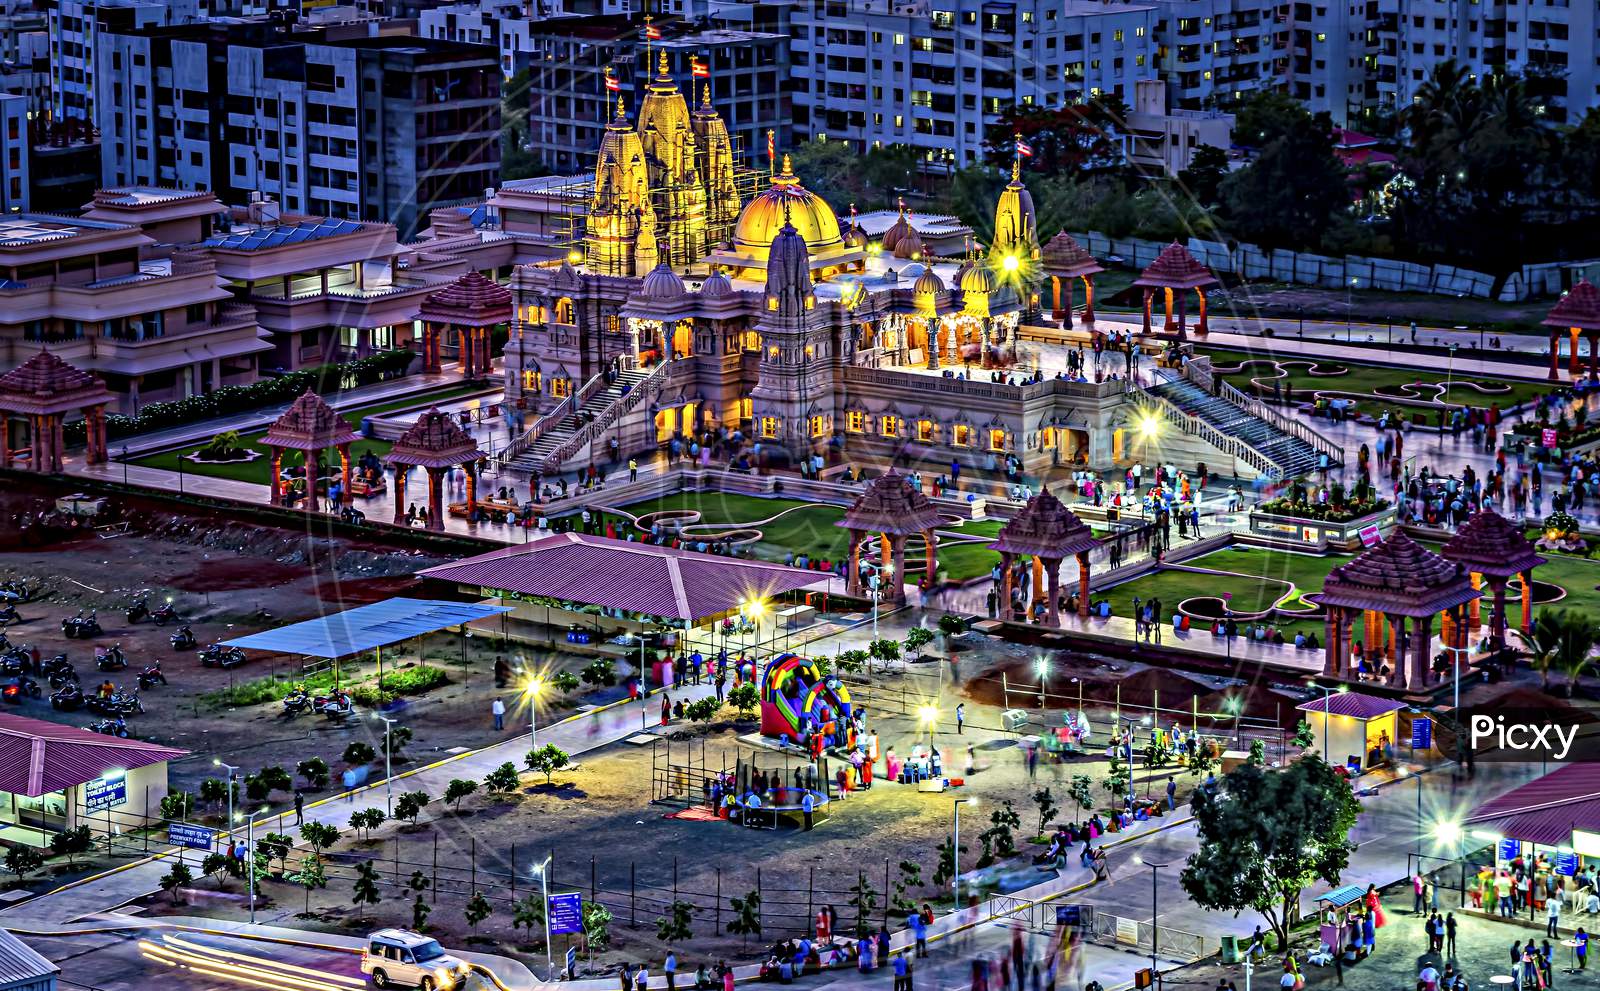 Shree Swaminarayan Temple With Beautiful Night Lighting In Pune, India .